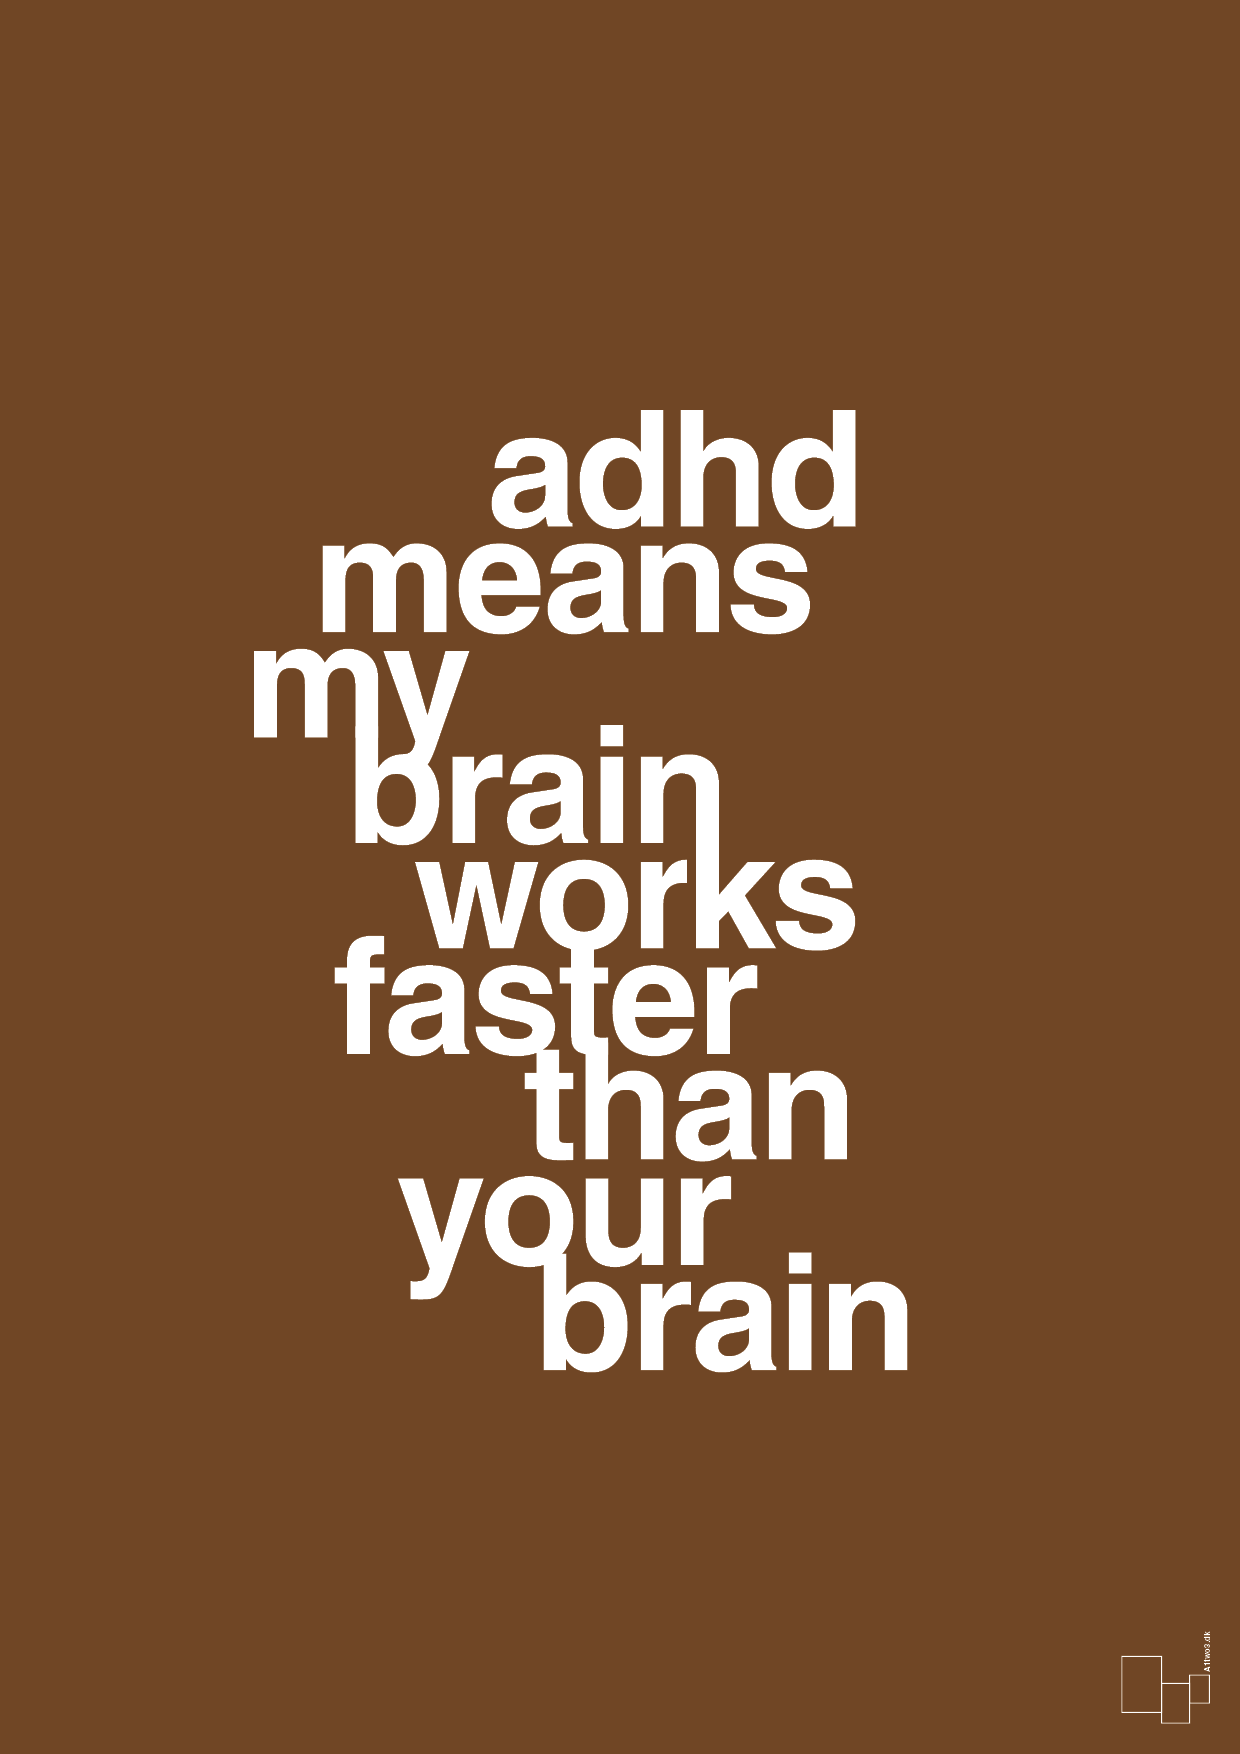 adhd means my brain works faster than your brain - Plakat med Samfund i Dark Brown